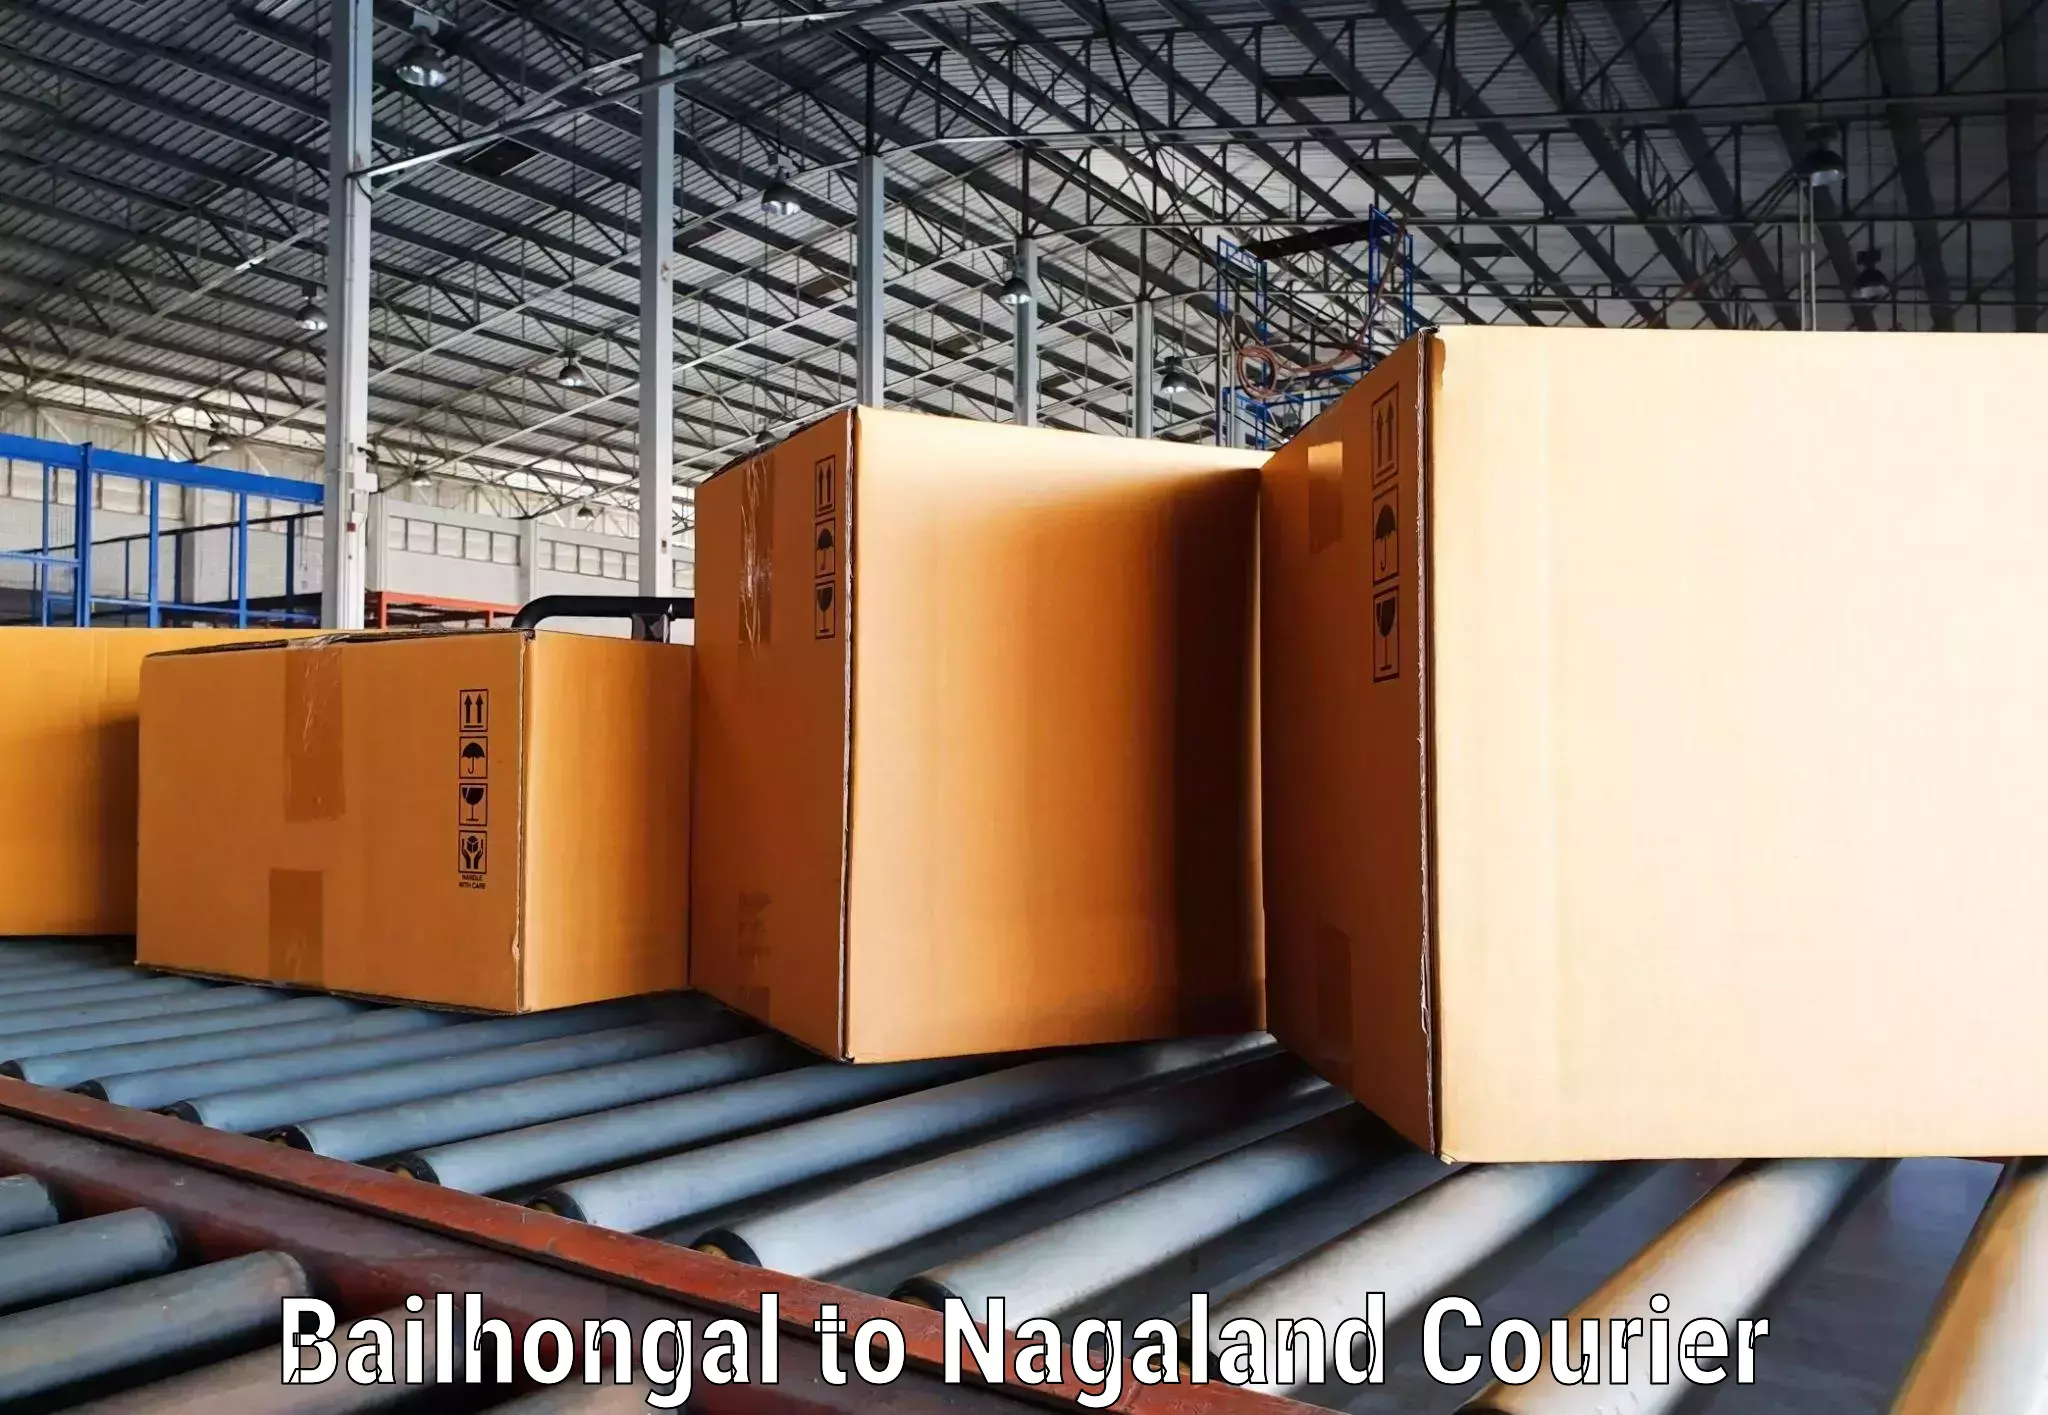 Door-to-door freight service Bailhongal to Nagaland